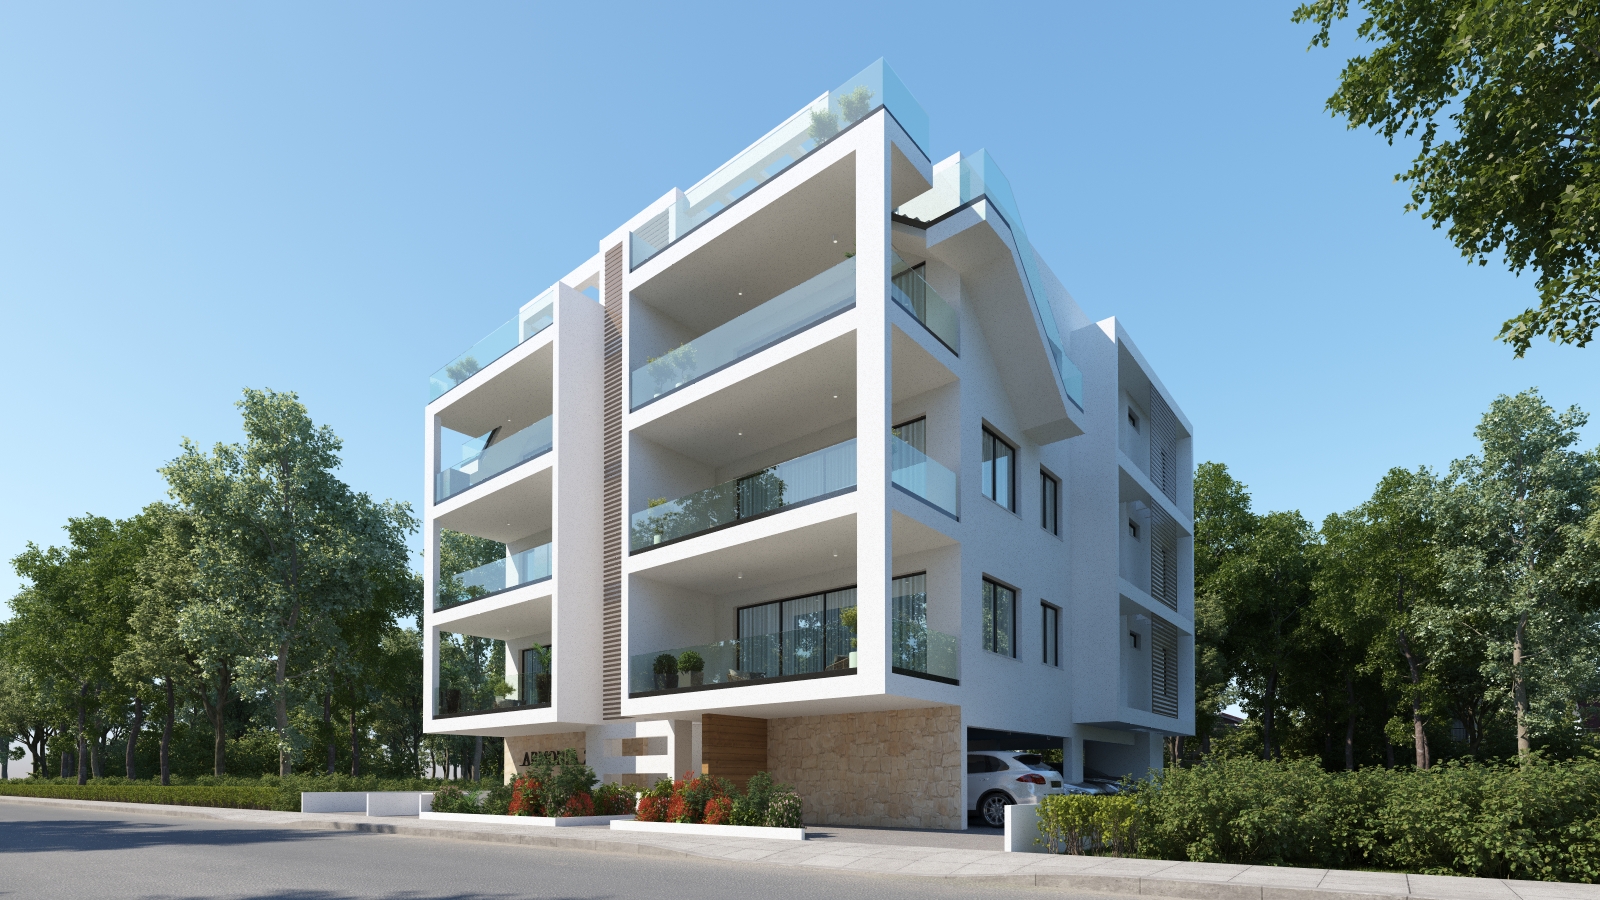 3 Bedroom Apartment for Sale in Larnaca – Agios Nikolaos